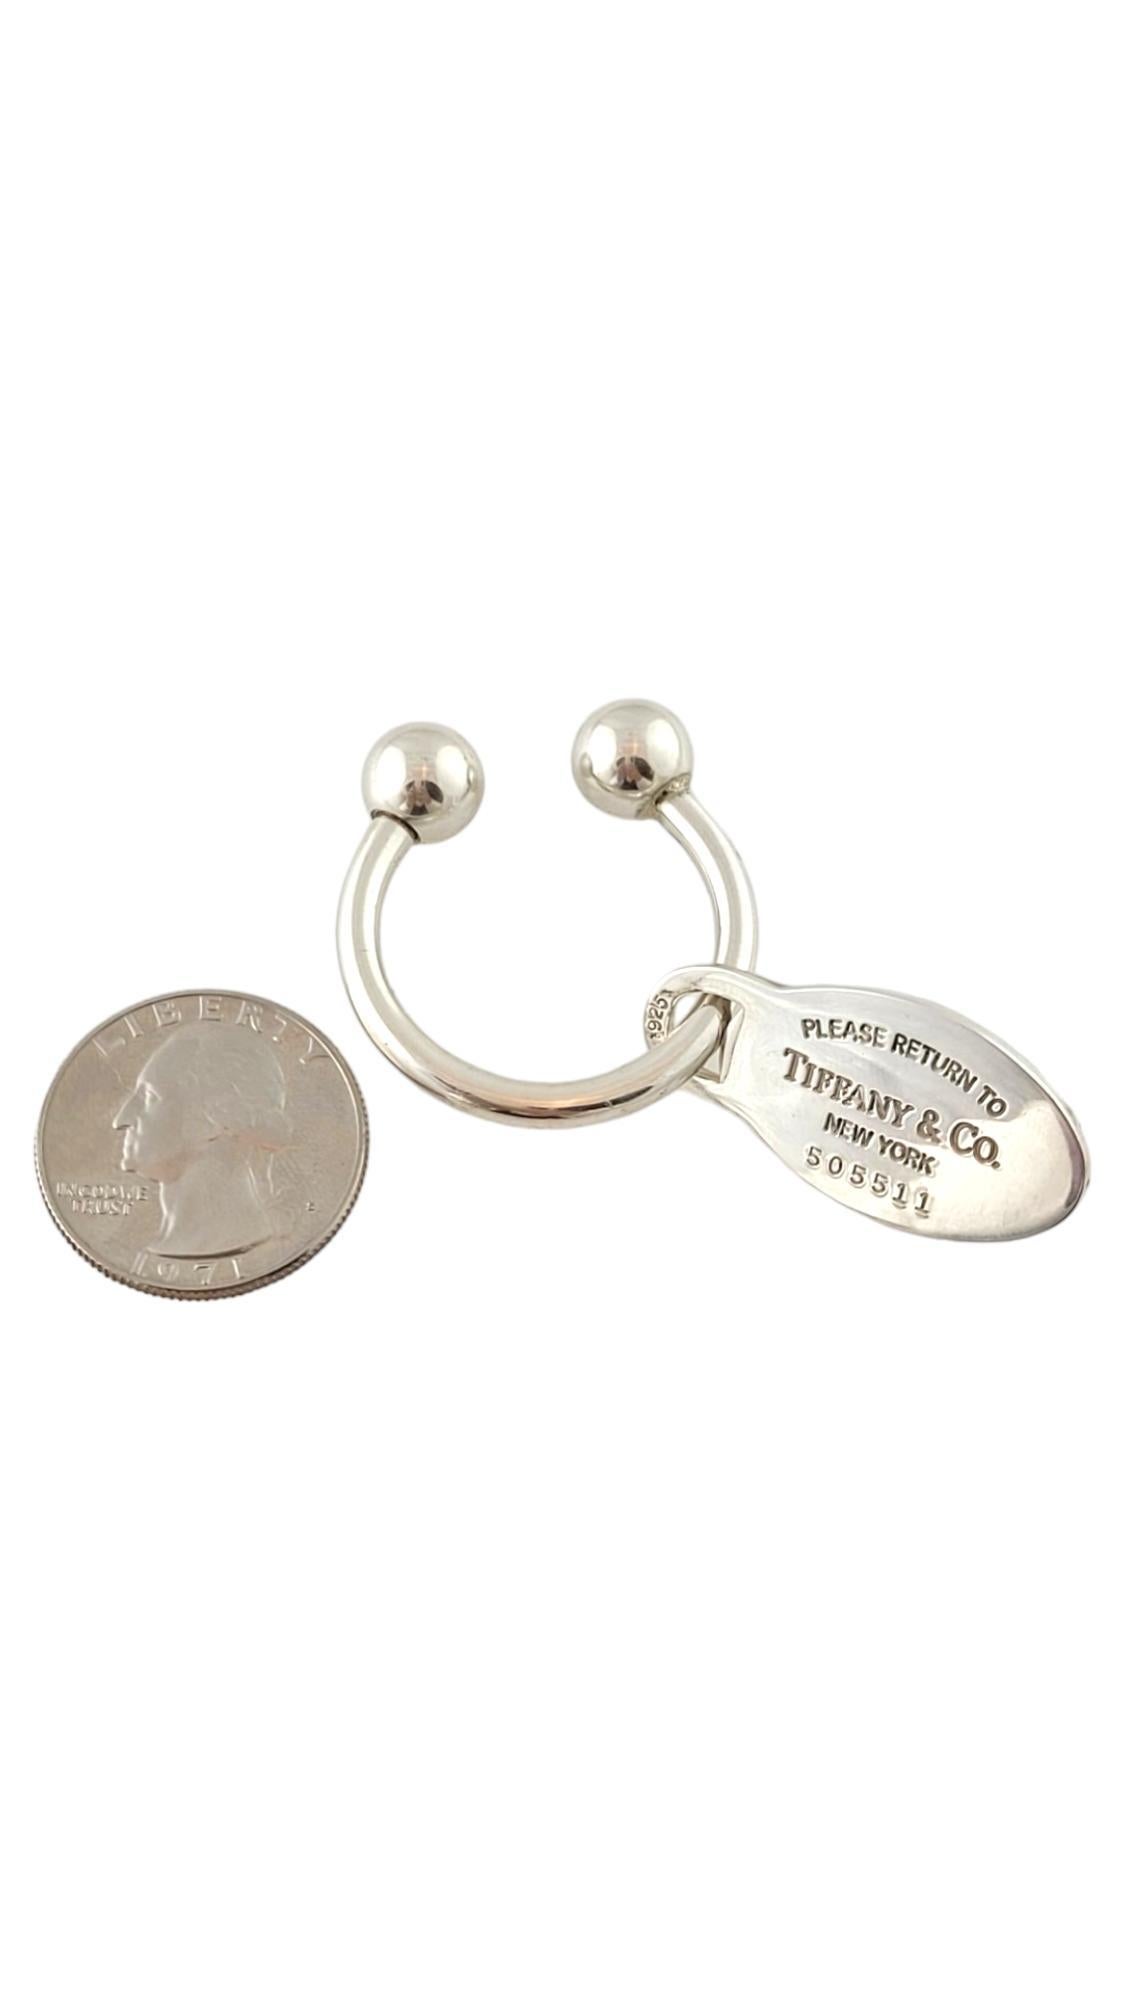 Tiffany & Co Sterling Silver Oval Tag Screwball Key Ring #17412 3